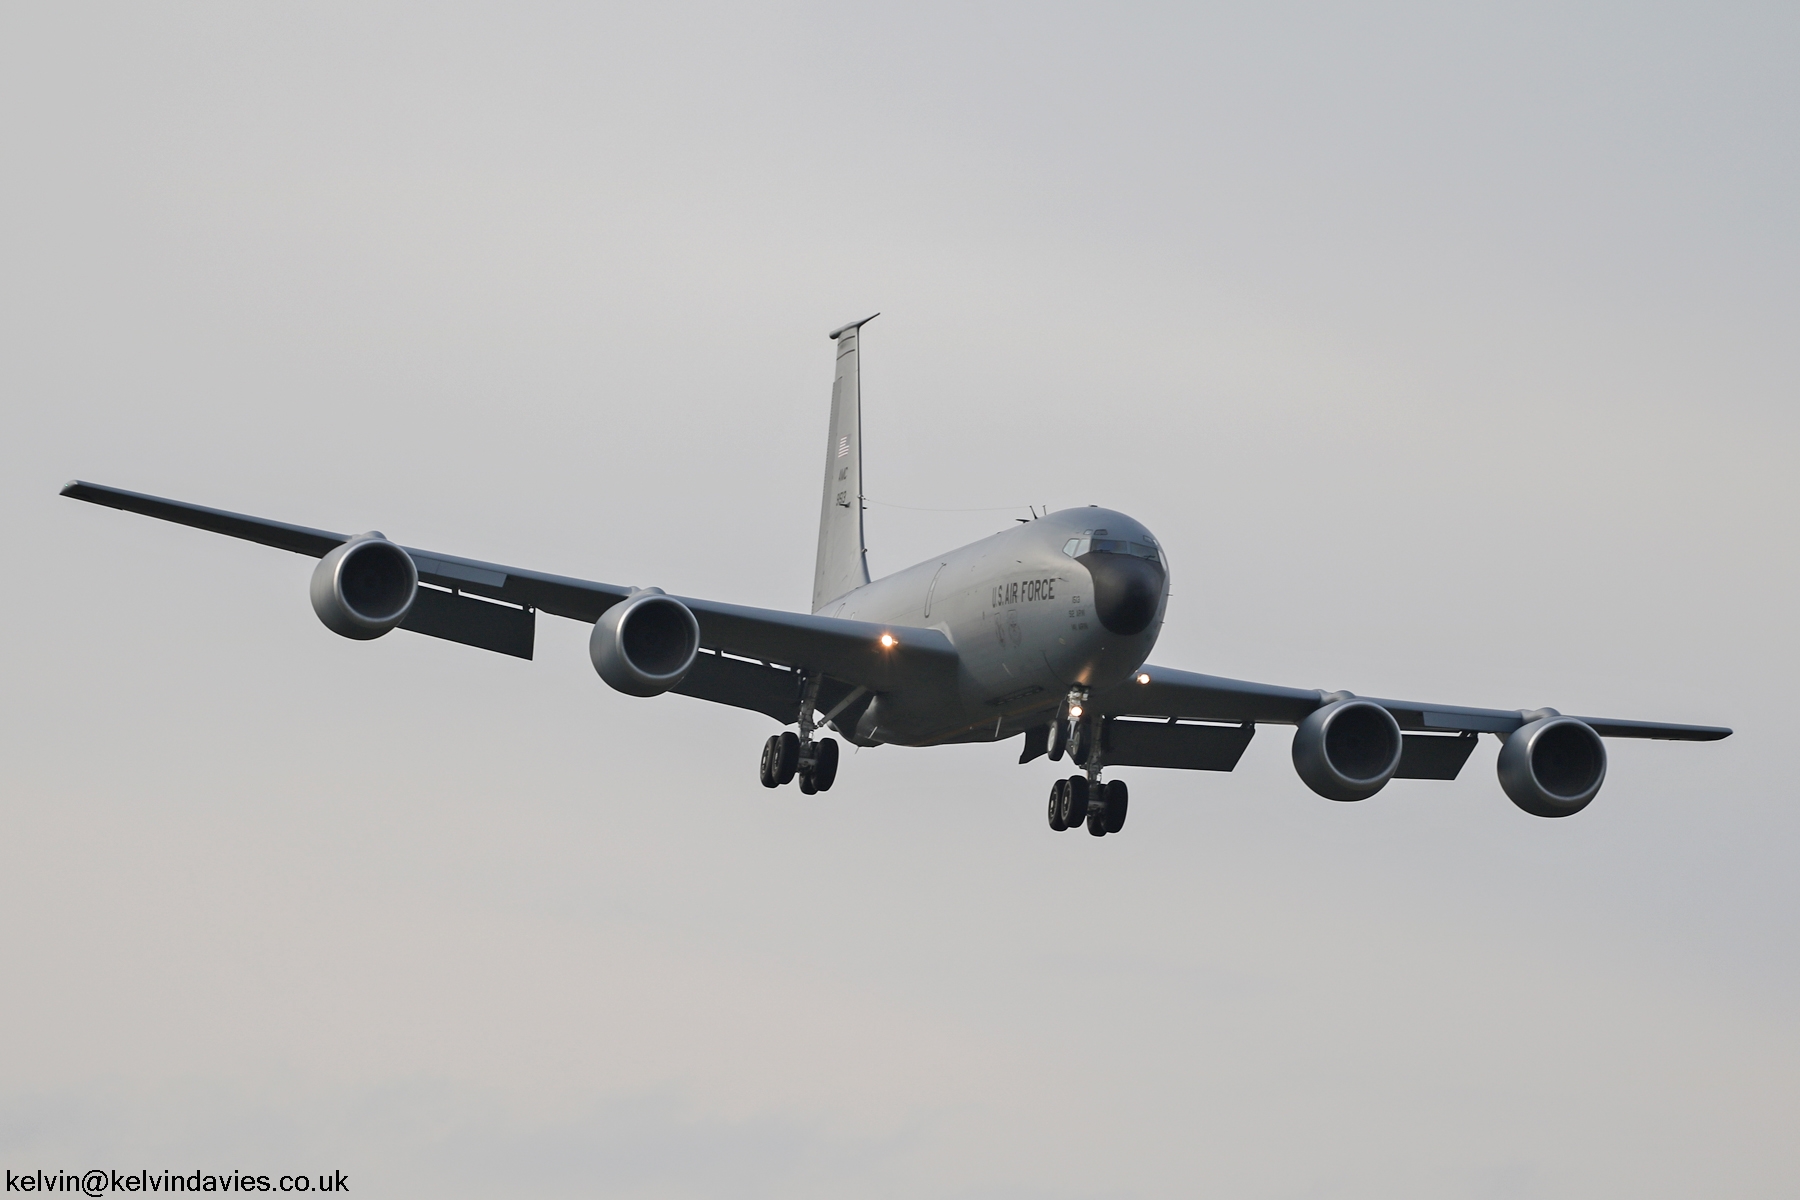 US Air Force KC-135T 59-1513